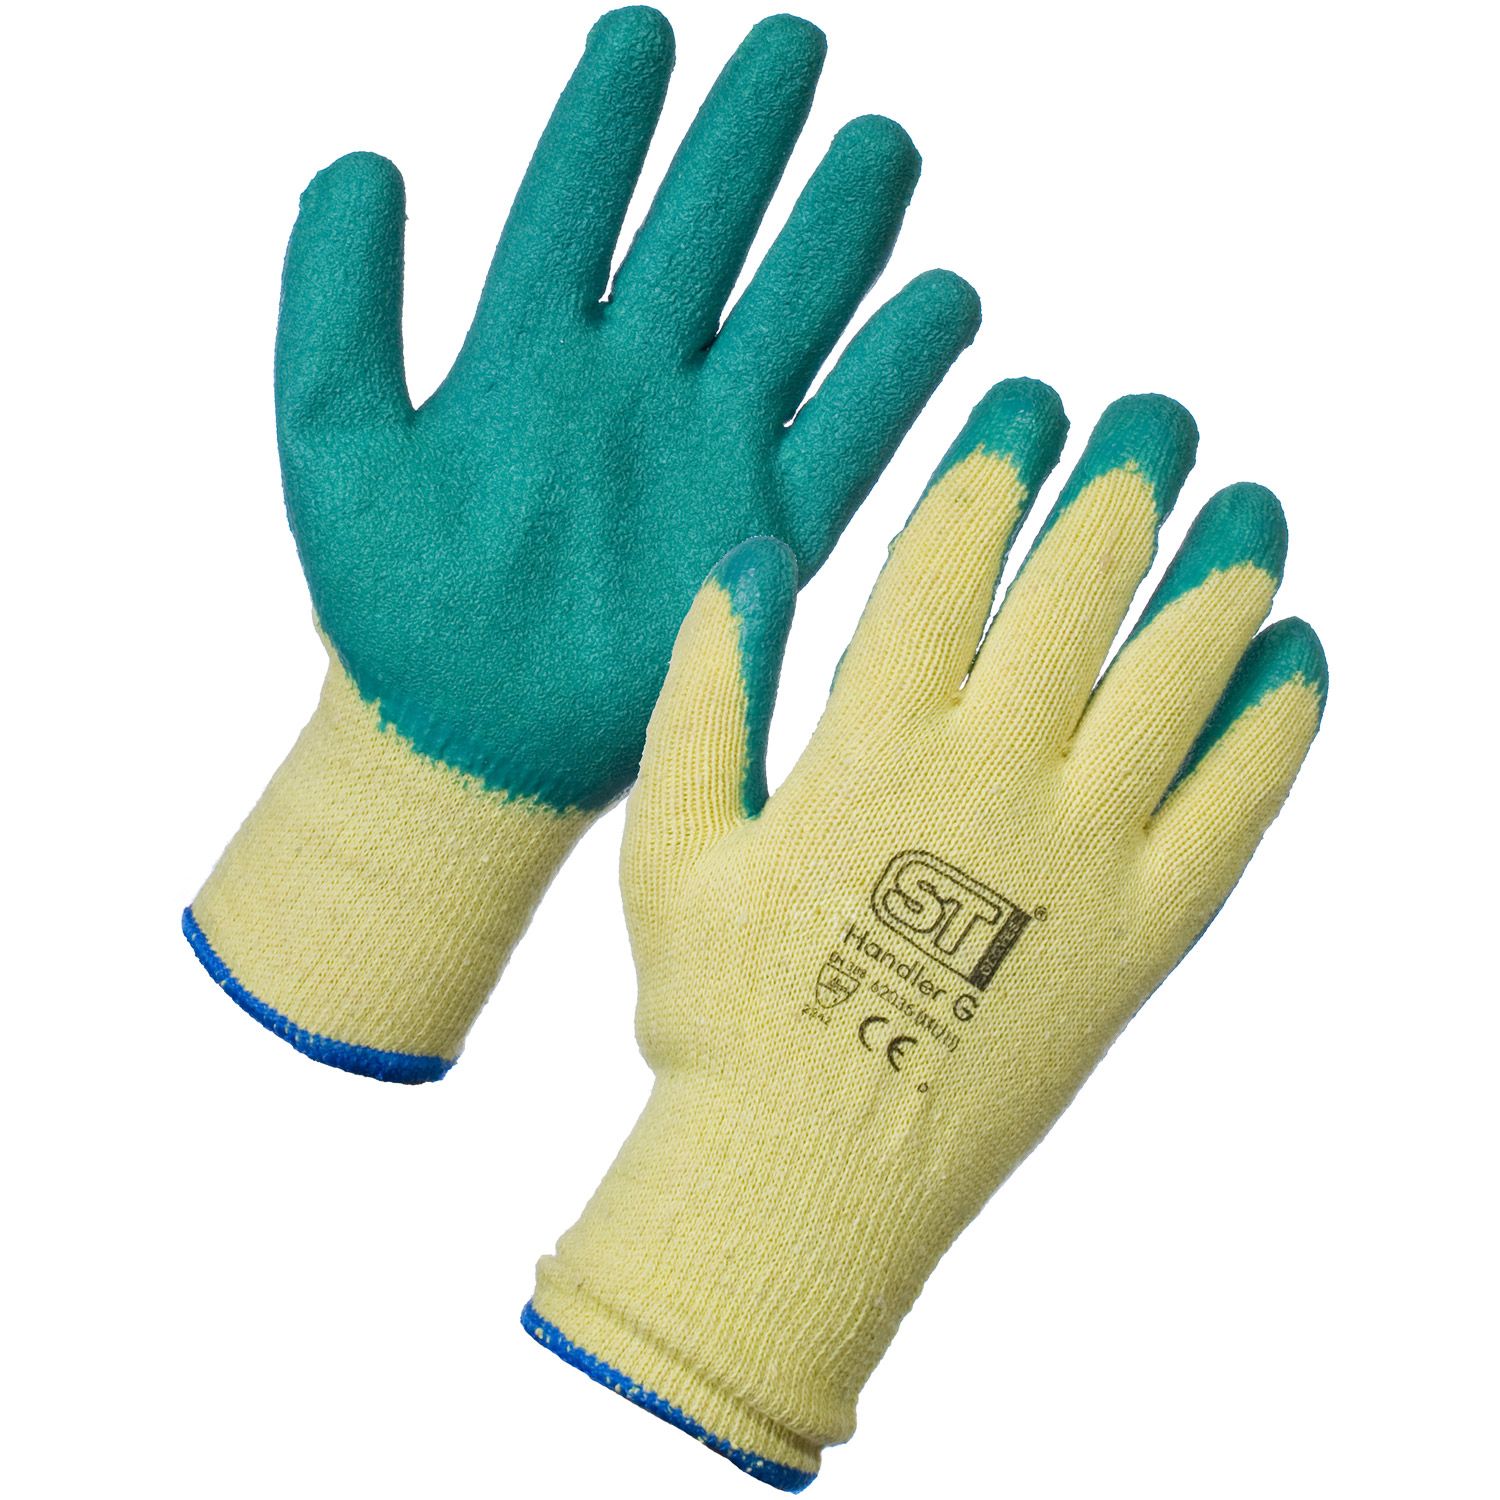 General Handler glove Latex coated (Green) - XL - 12 Pack